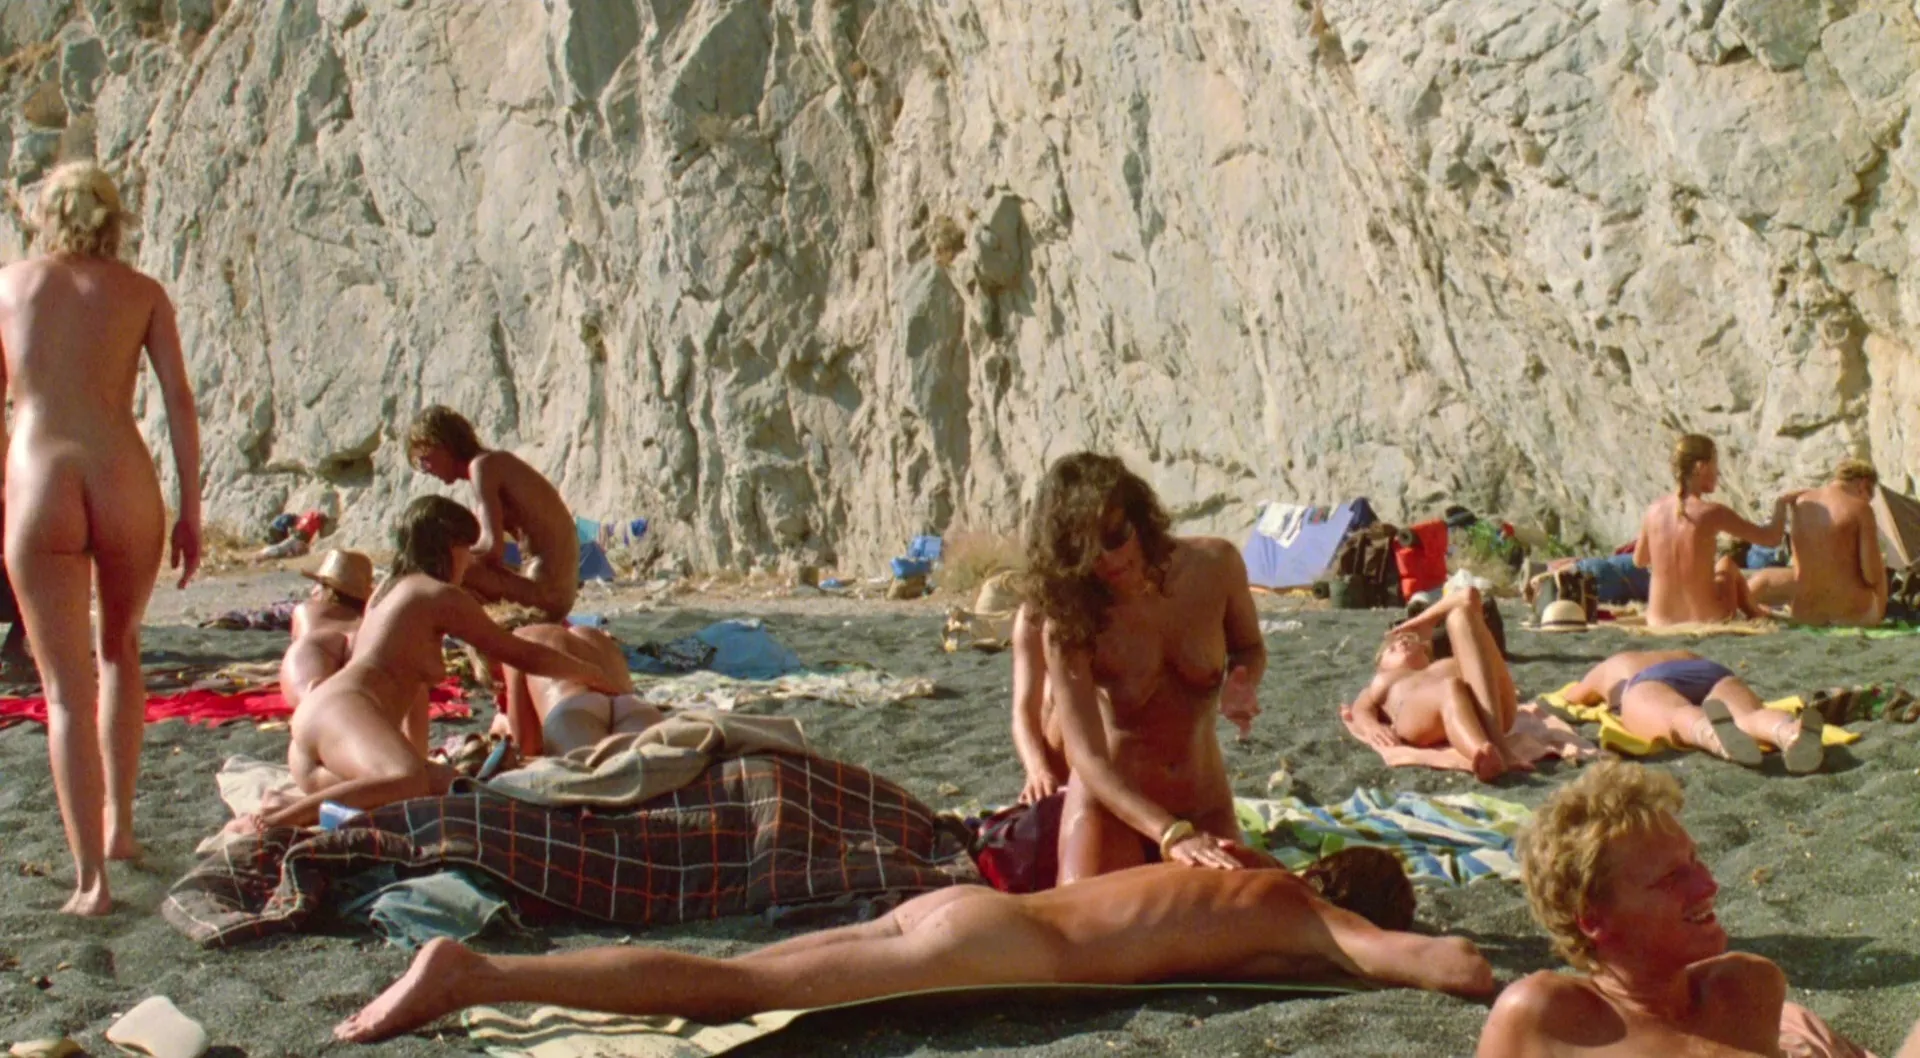 Summer Lovers 1982 Nude Beach - Nude Beach in Greece from Summer Lovers (1982) nudes : nudist_beach | NUDE -PICS.ORG